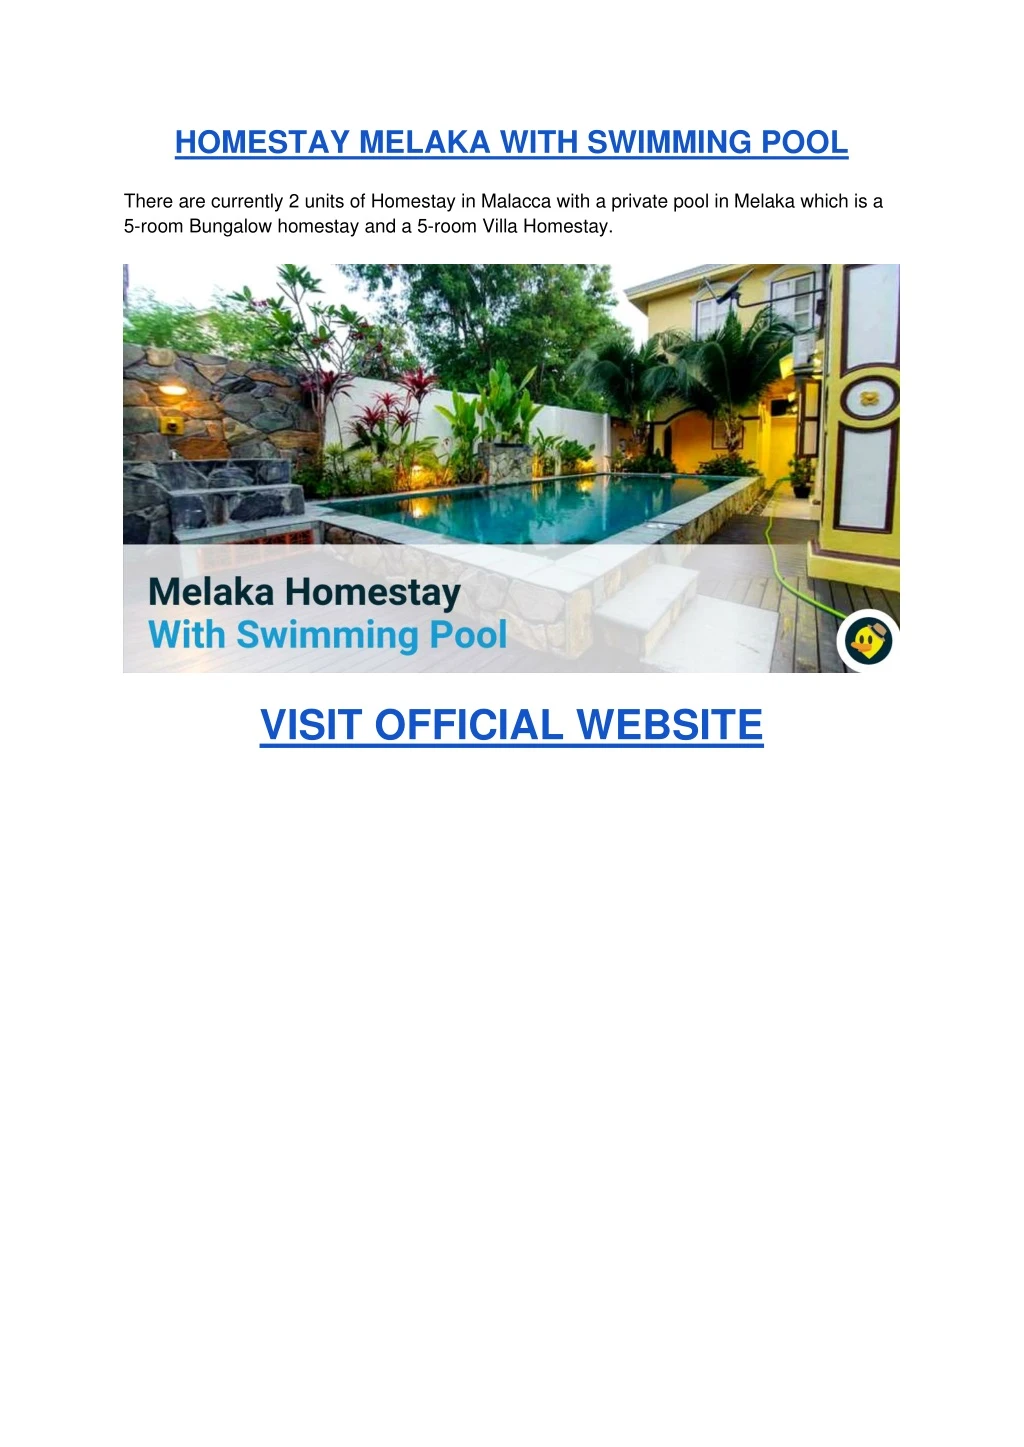 homestay melaka with swimming pool